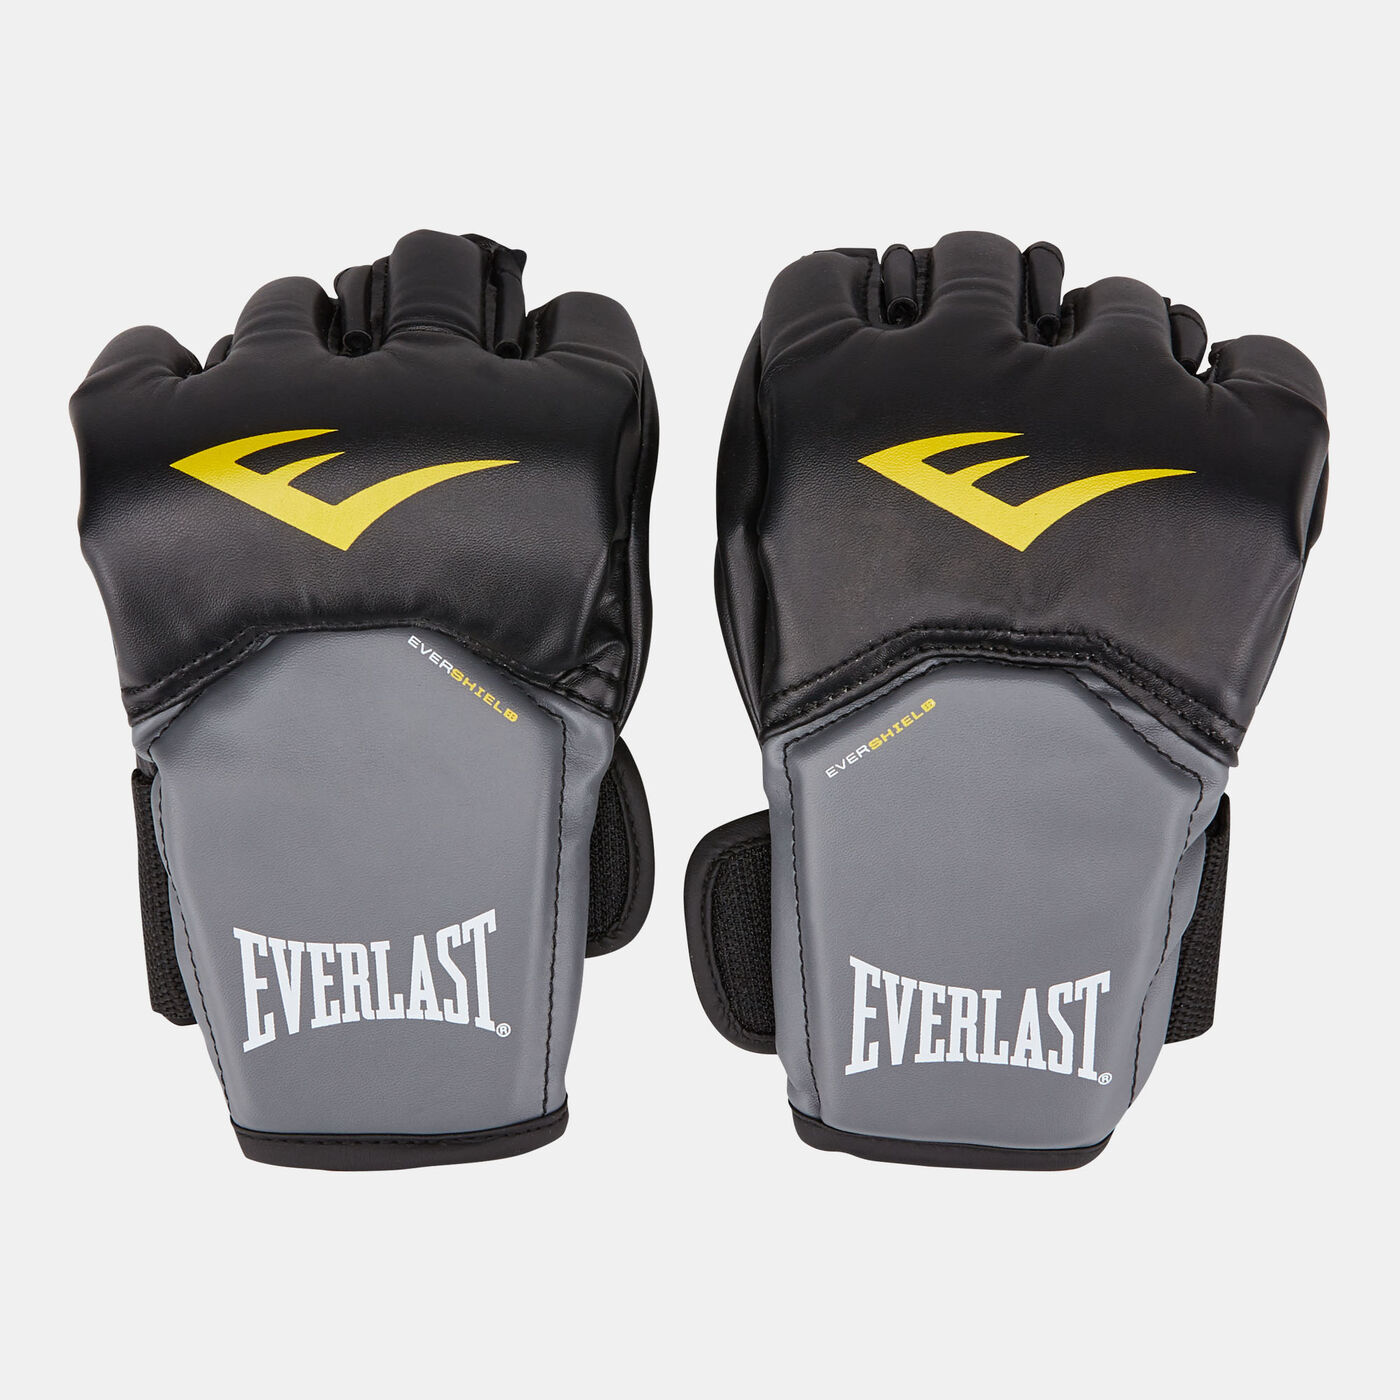 MMA Powerlock Training Gloves